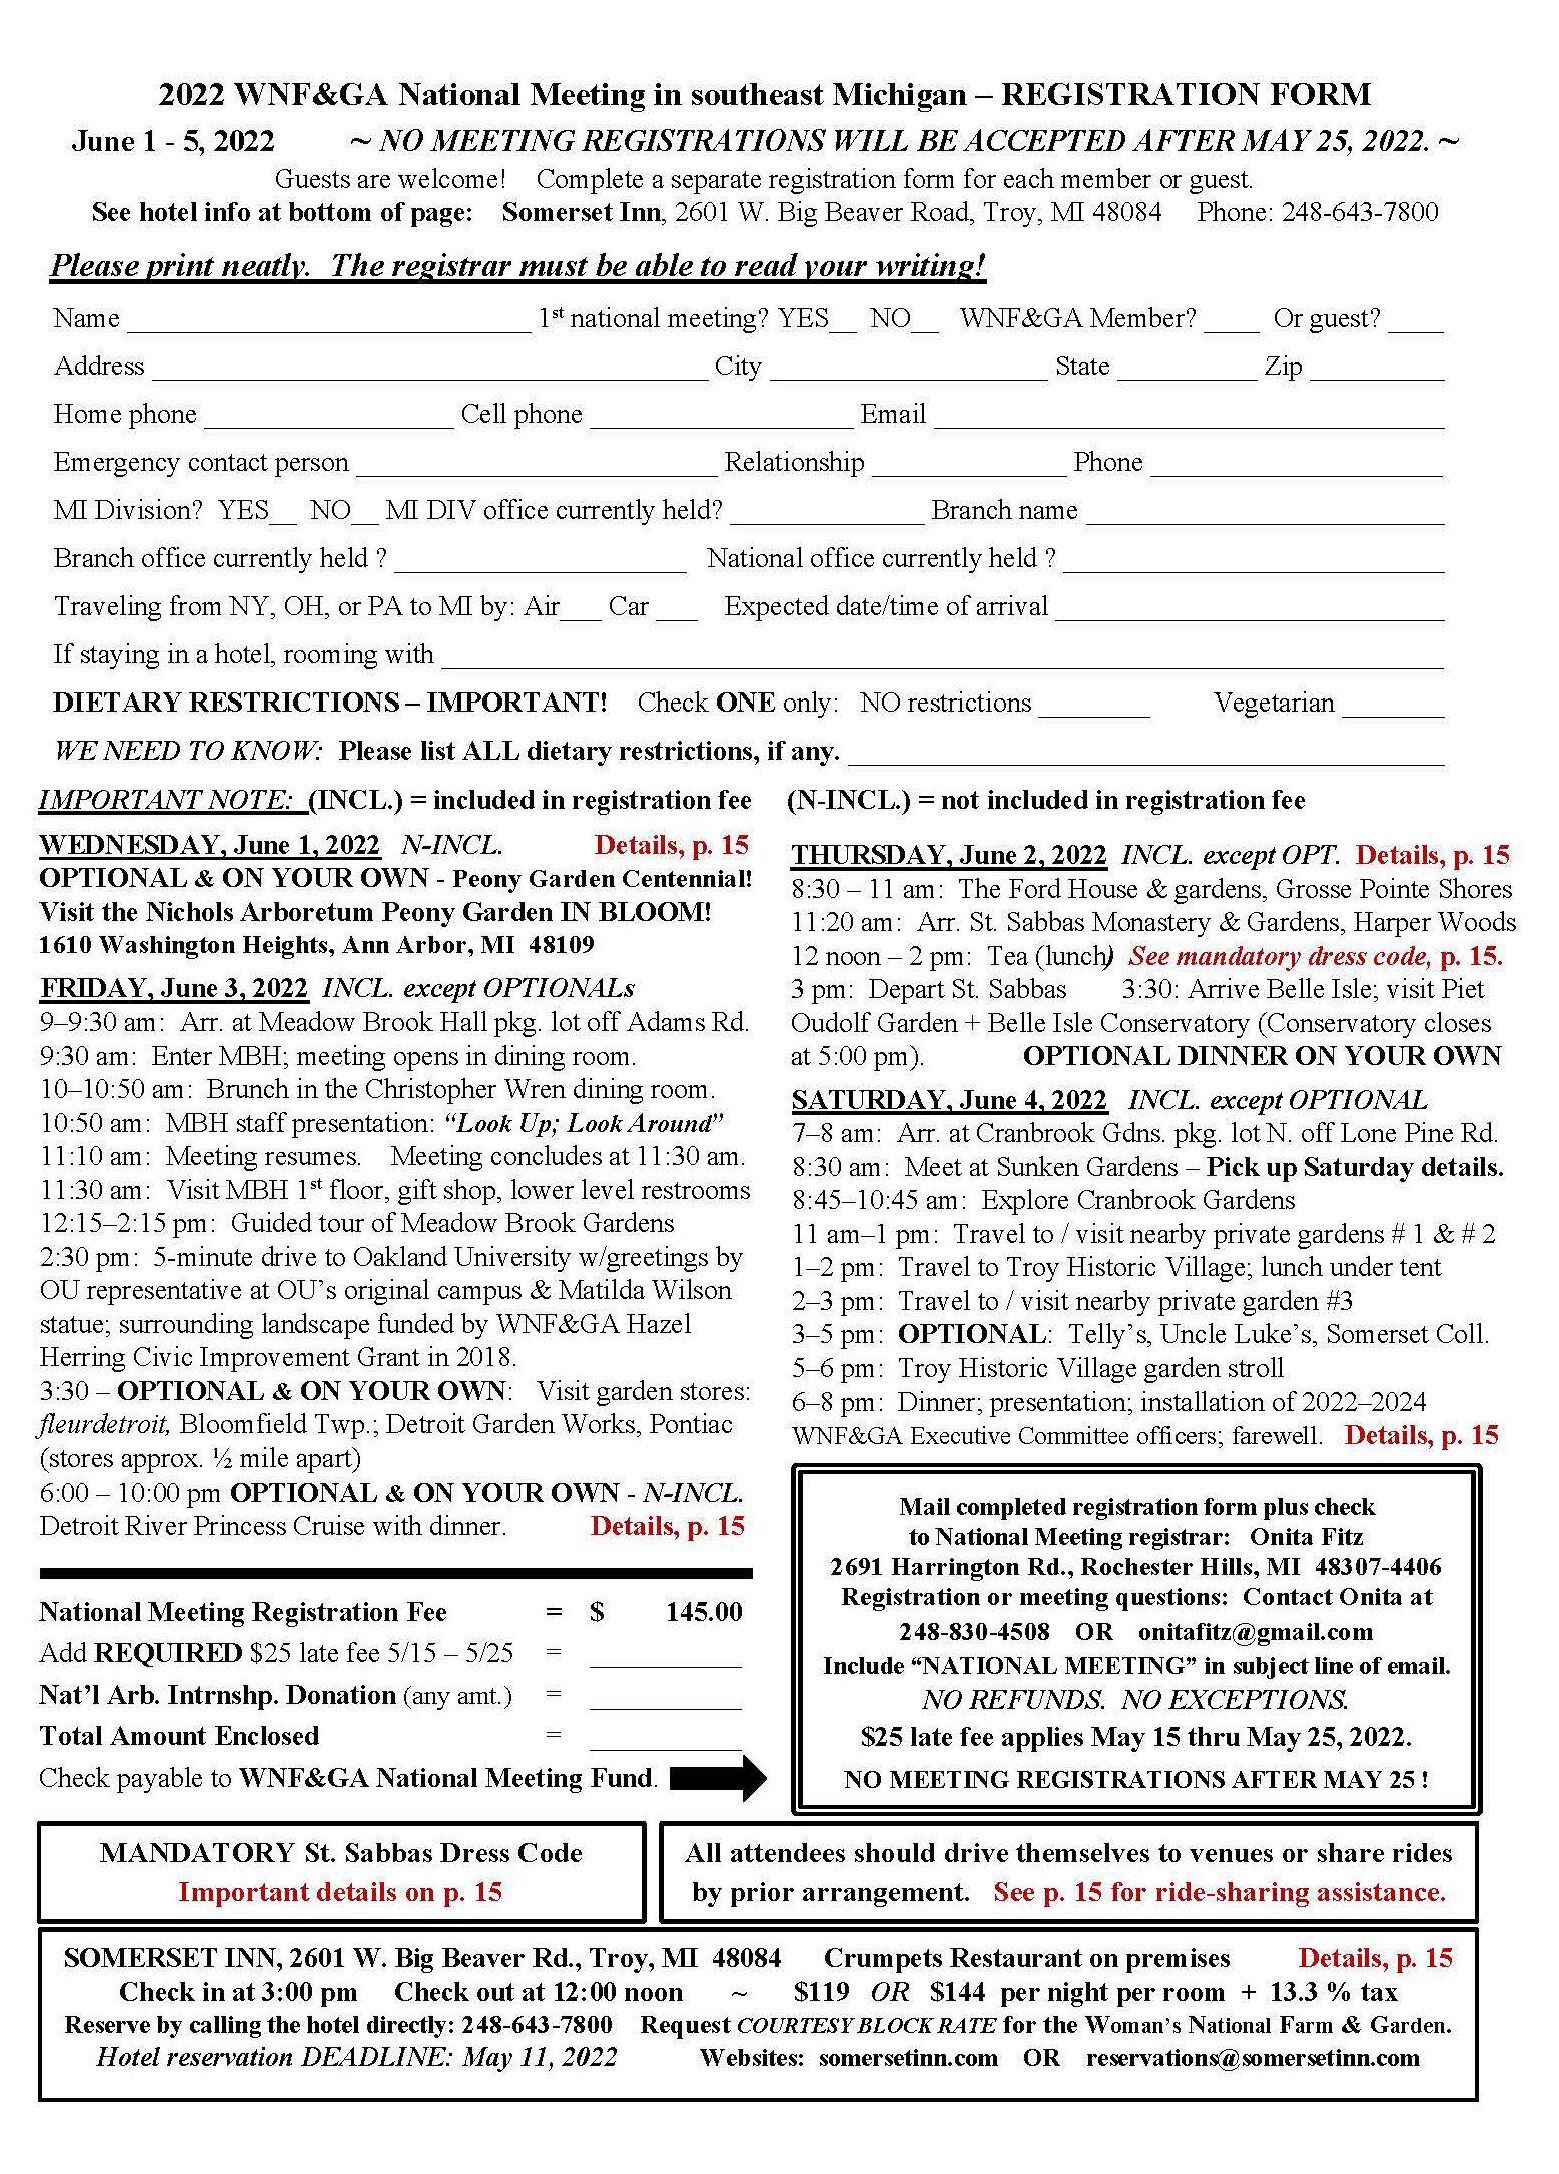 June 2022 Michigan Registration Form